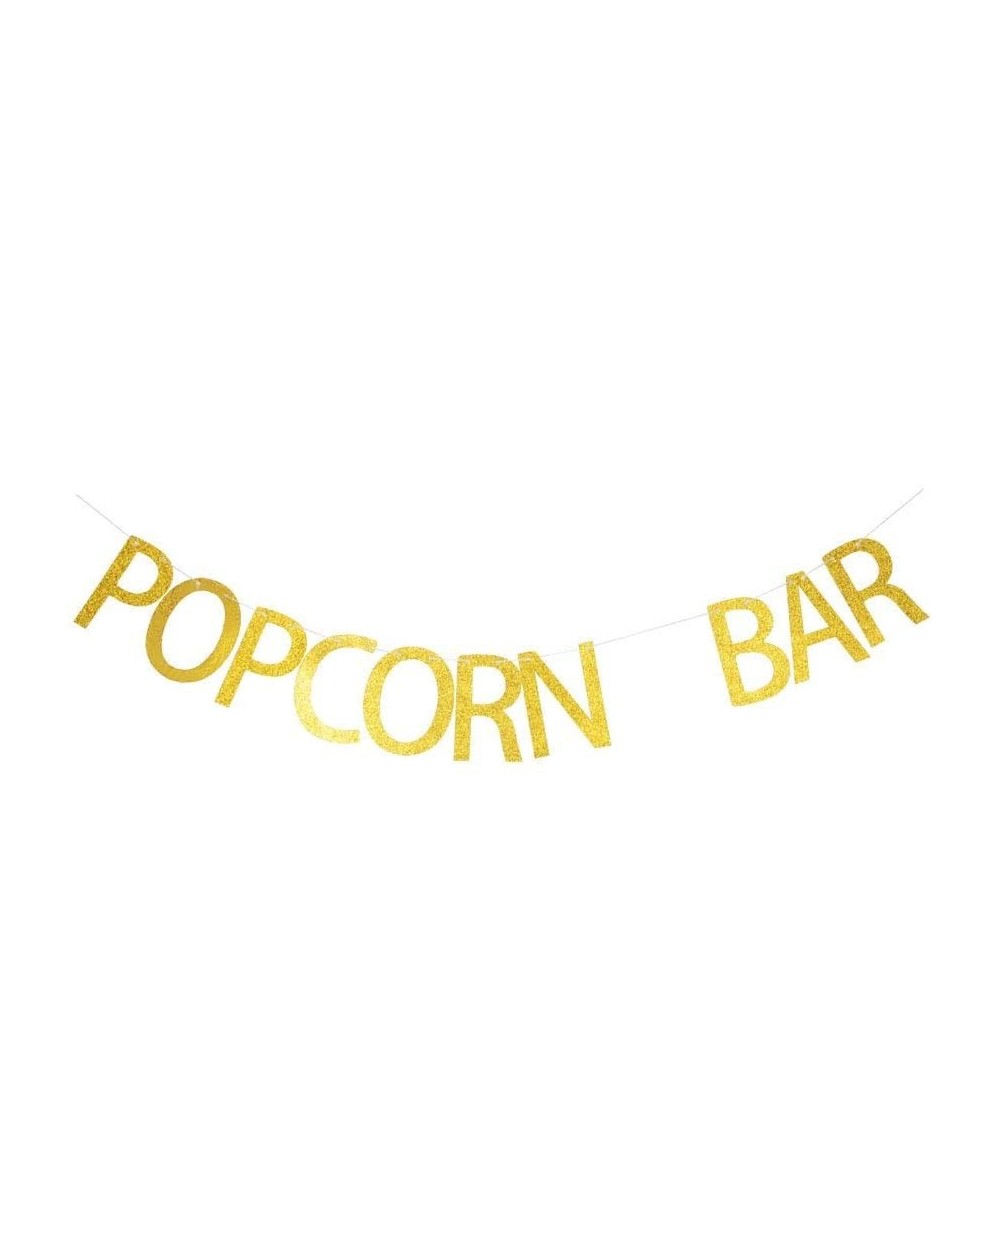 Banners & Garlands Popcorn Bar Banner- Gold Glitter Letters Popcorn Snacks S'Mores Candy Bar Buffet Decorations - CX18DA4ET4X...